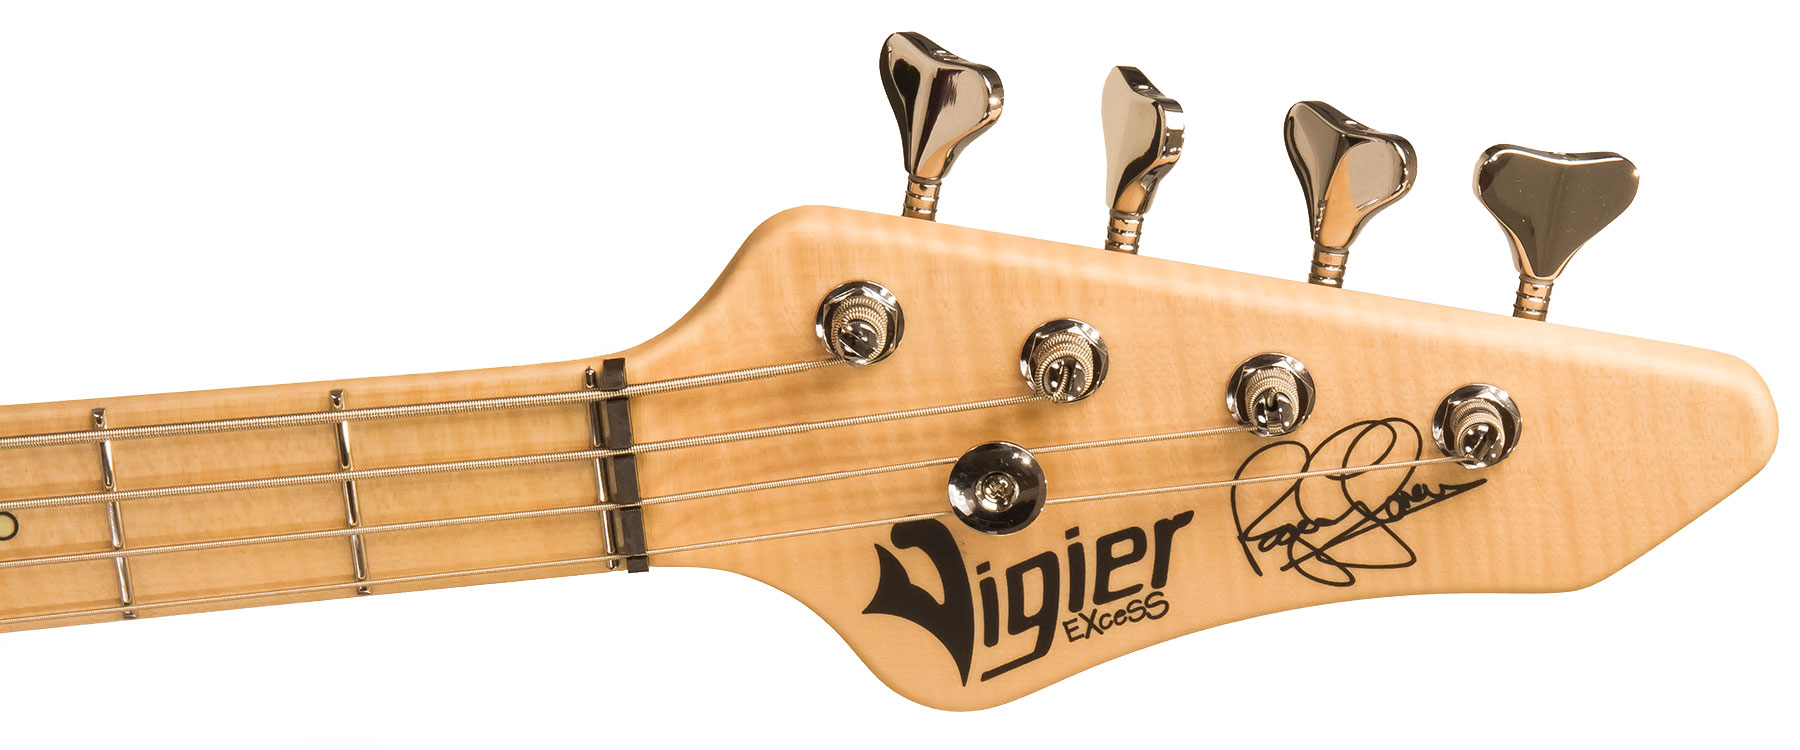 Vigier Roger Glover Excess Original Signature Active Rw - Clear Purple - Solid body elektrische bas - Variation 4